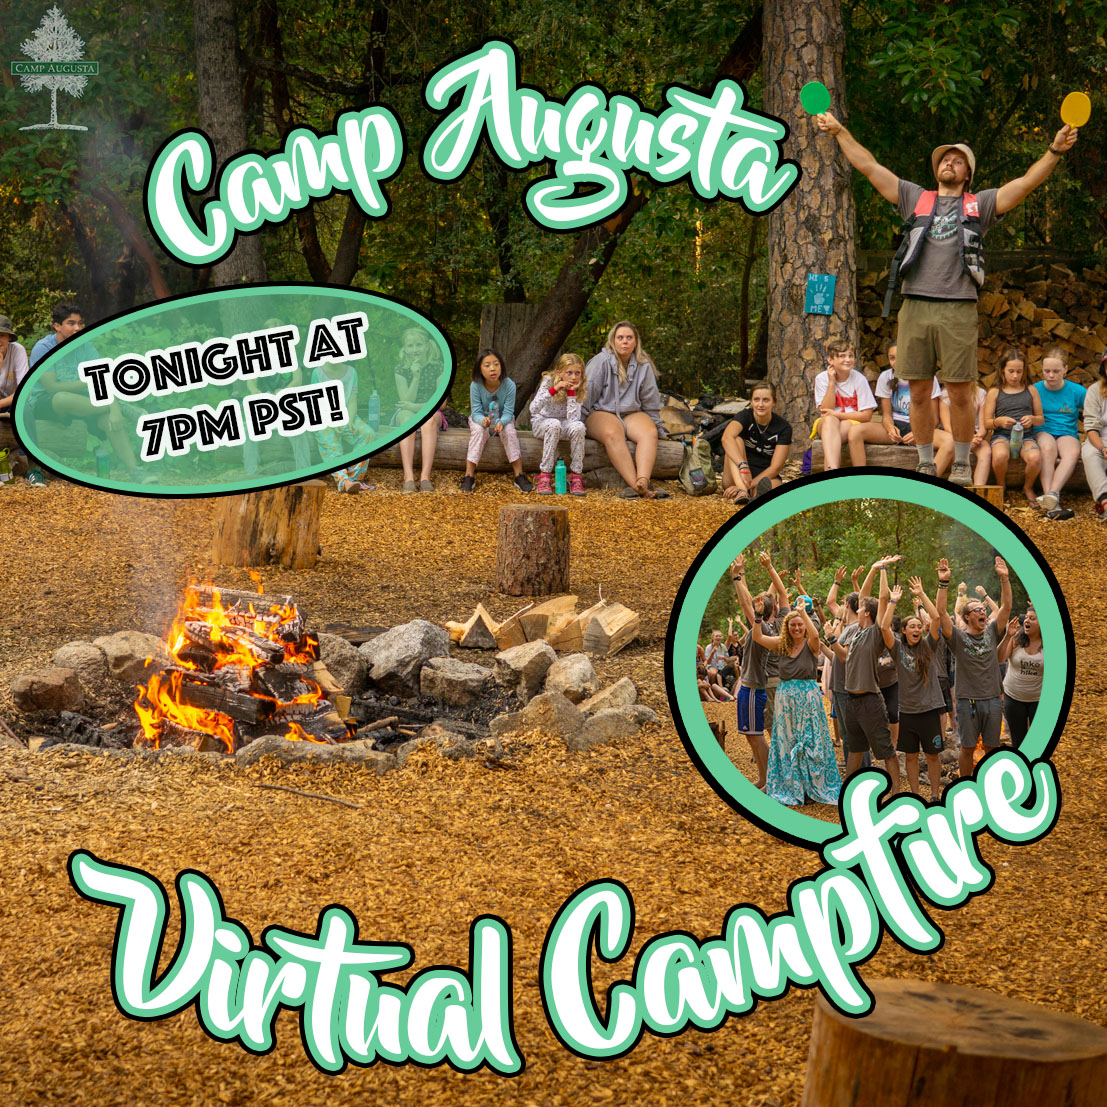 Virtual Campfire